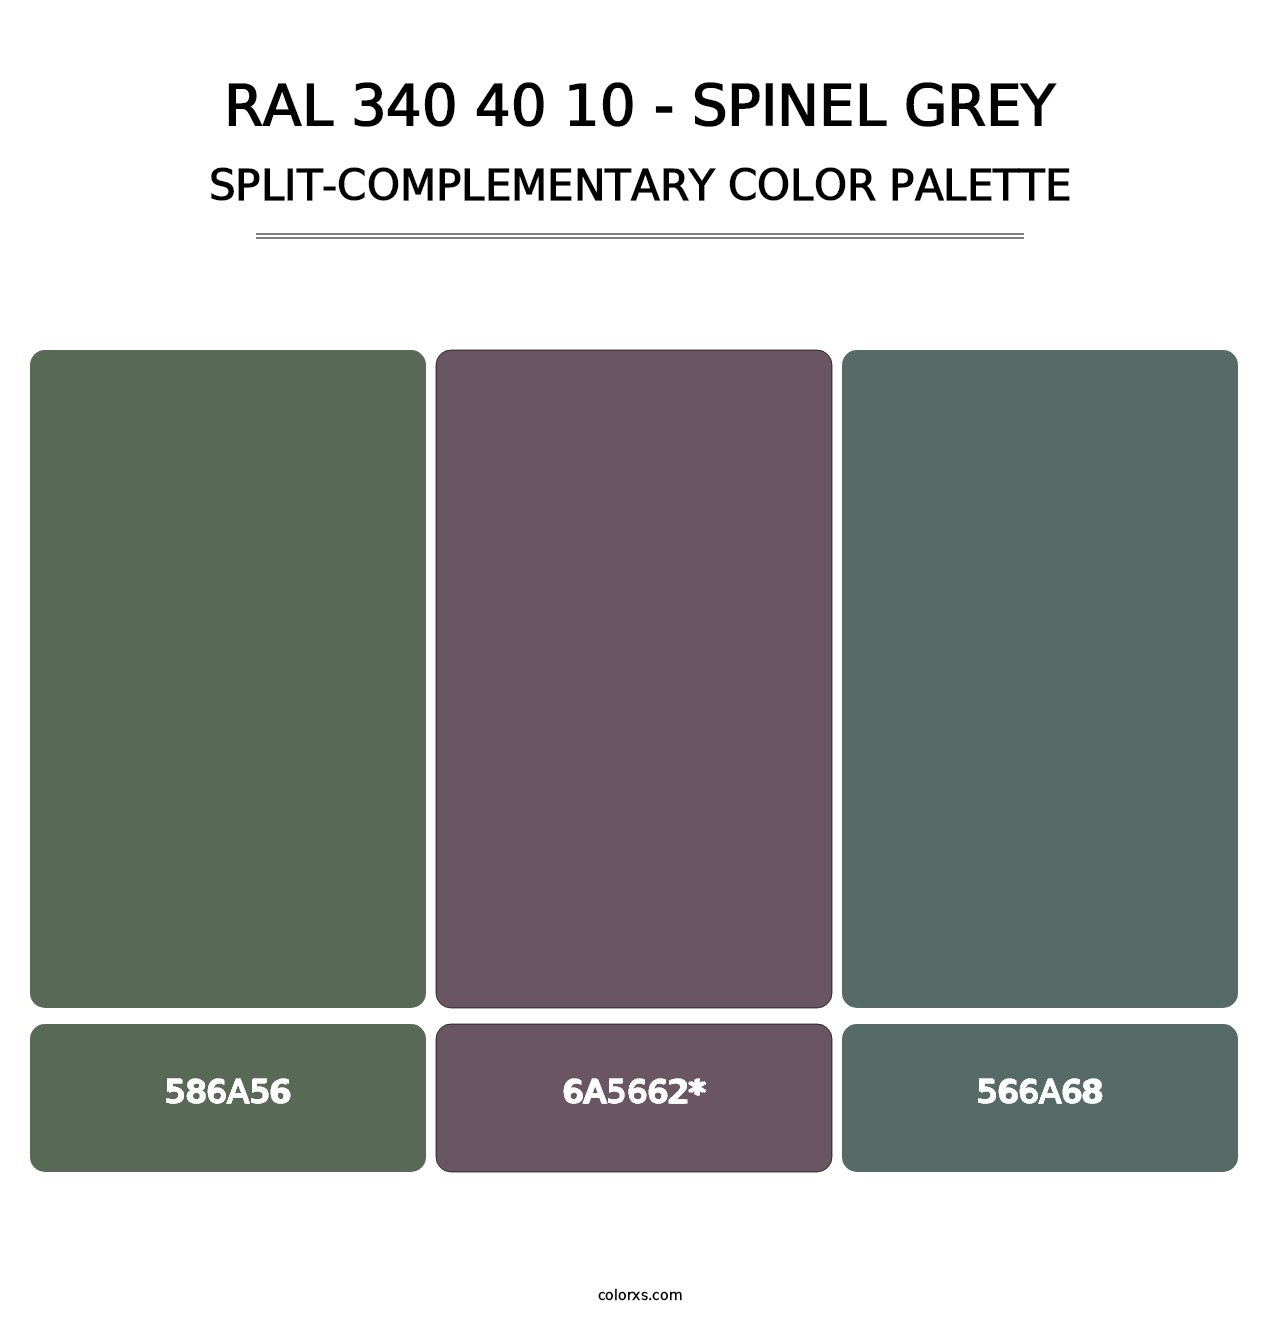 RAL 340 40 10 - Spinel Grey - Split-Complementary Color Palette